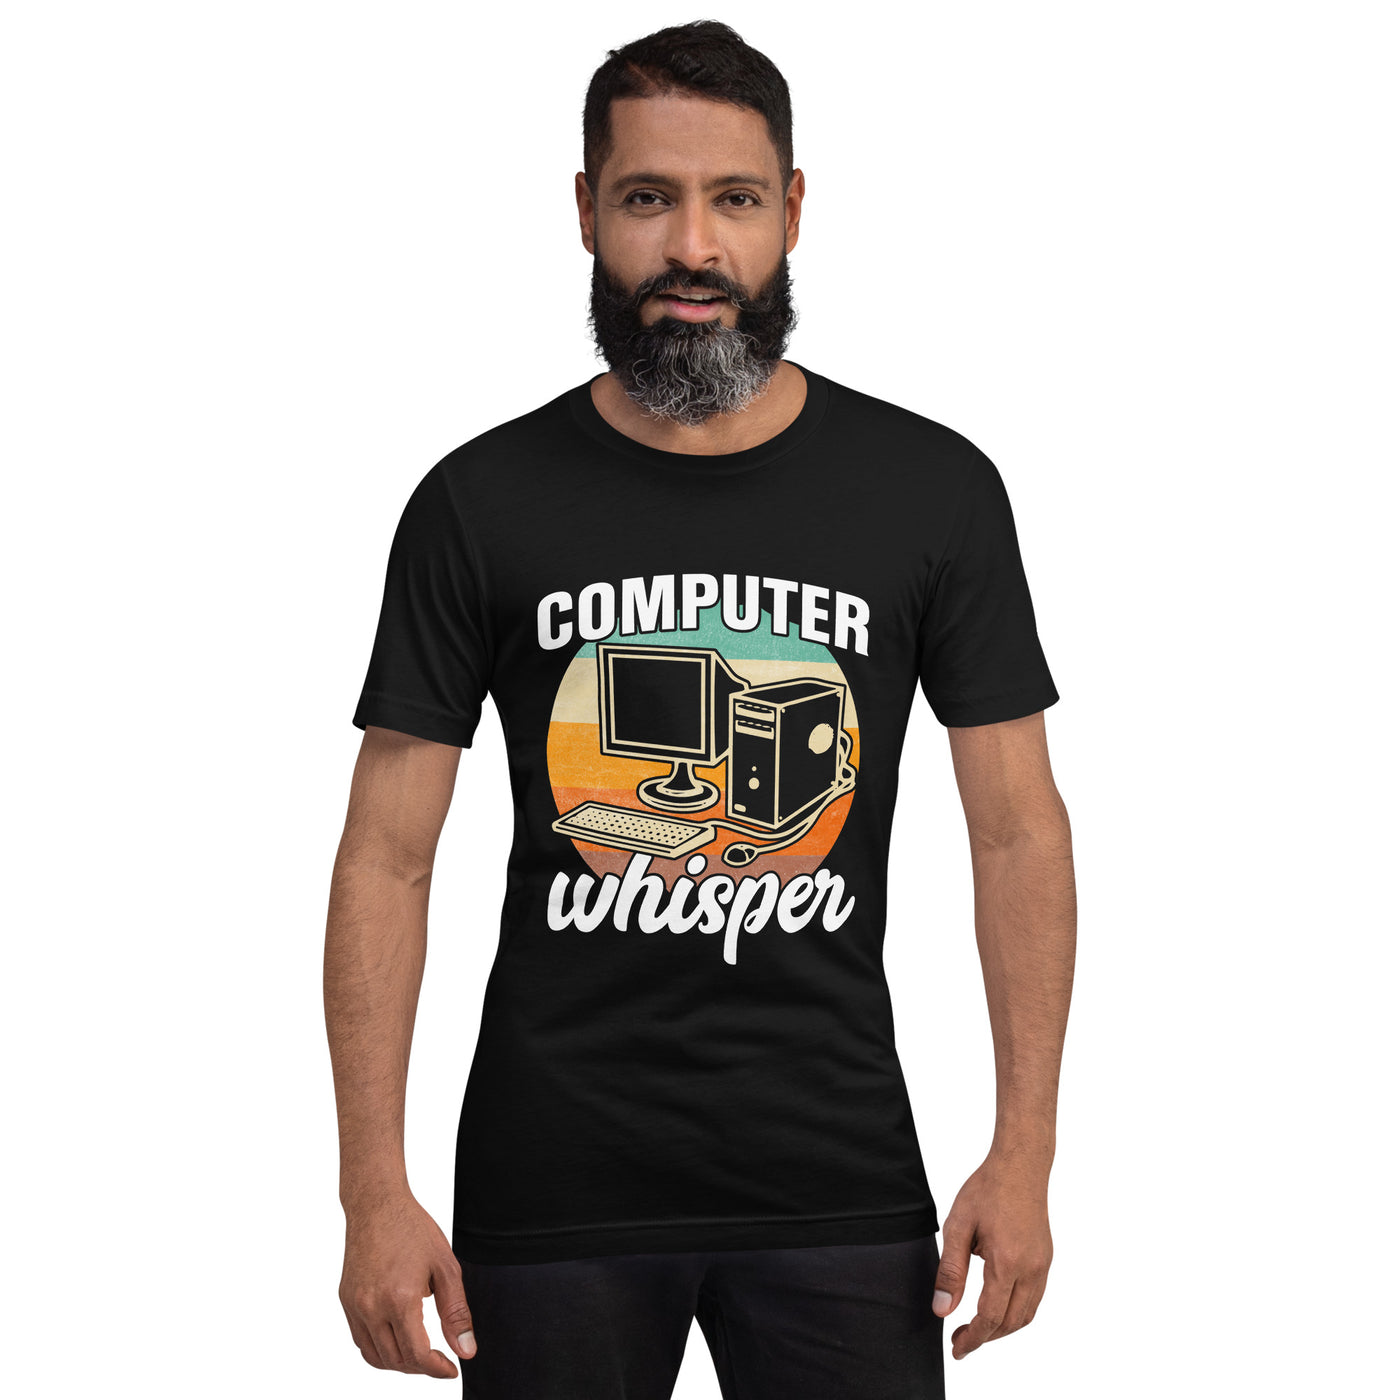 Computers whisper - Unisex t-shirt